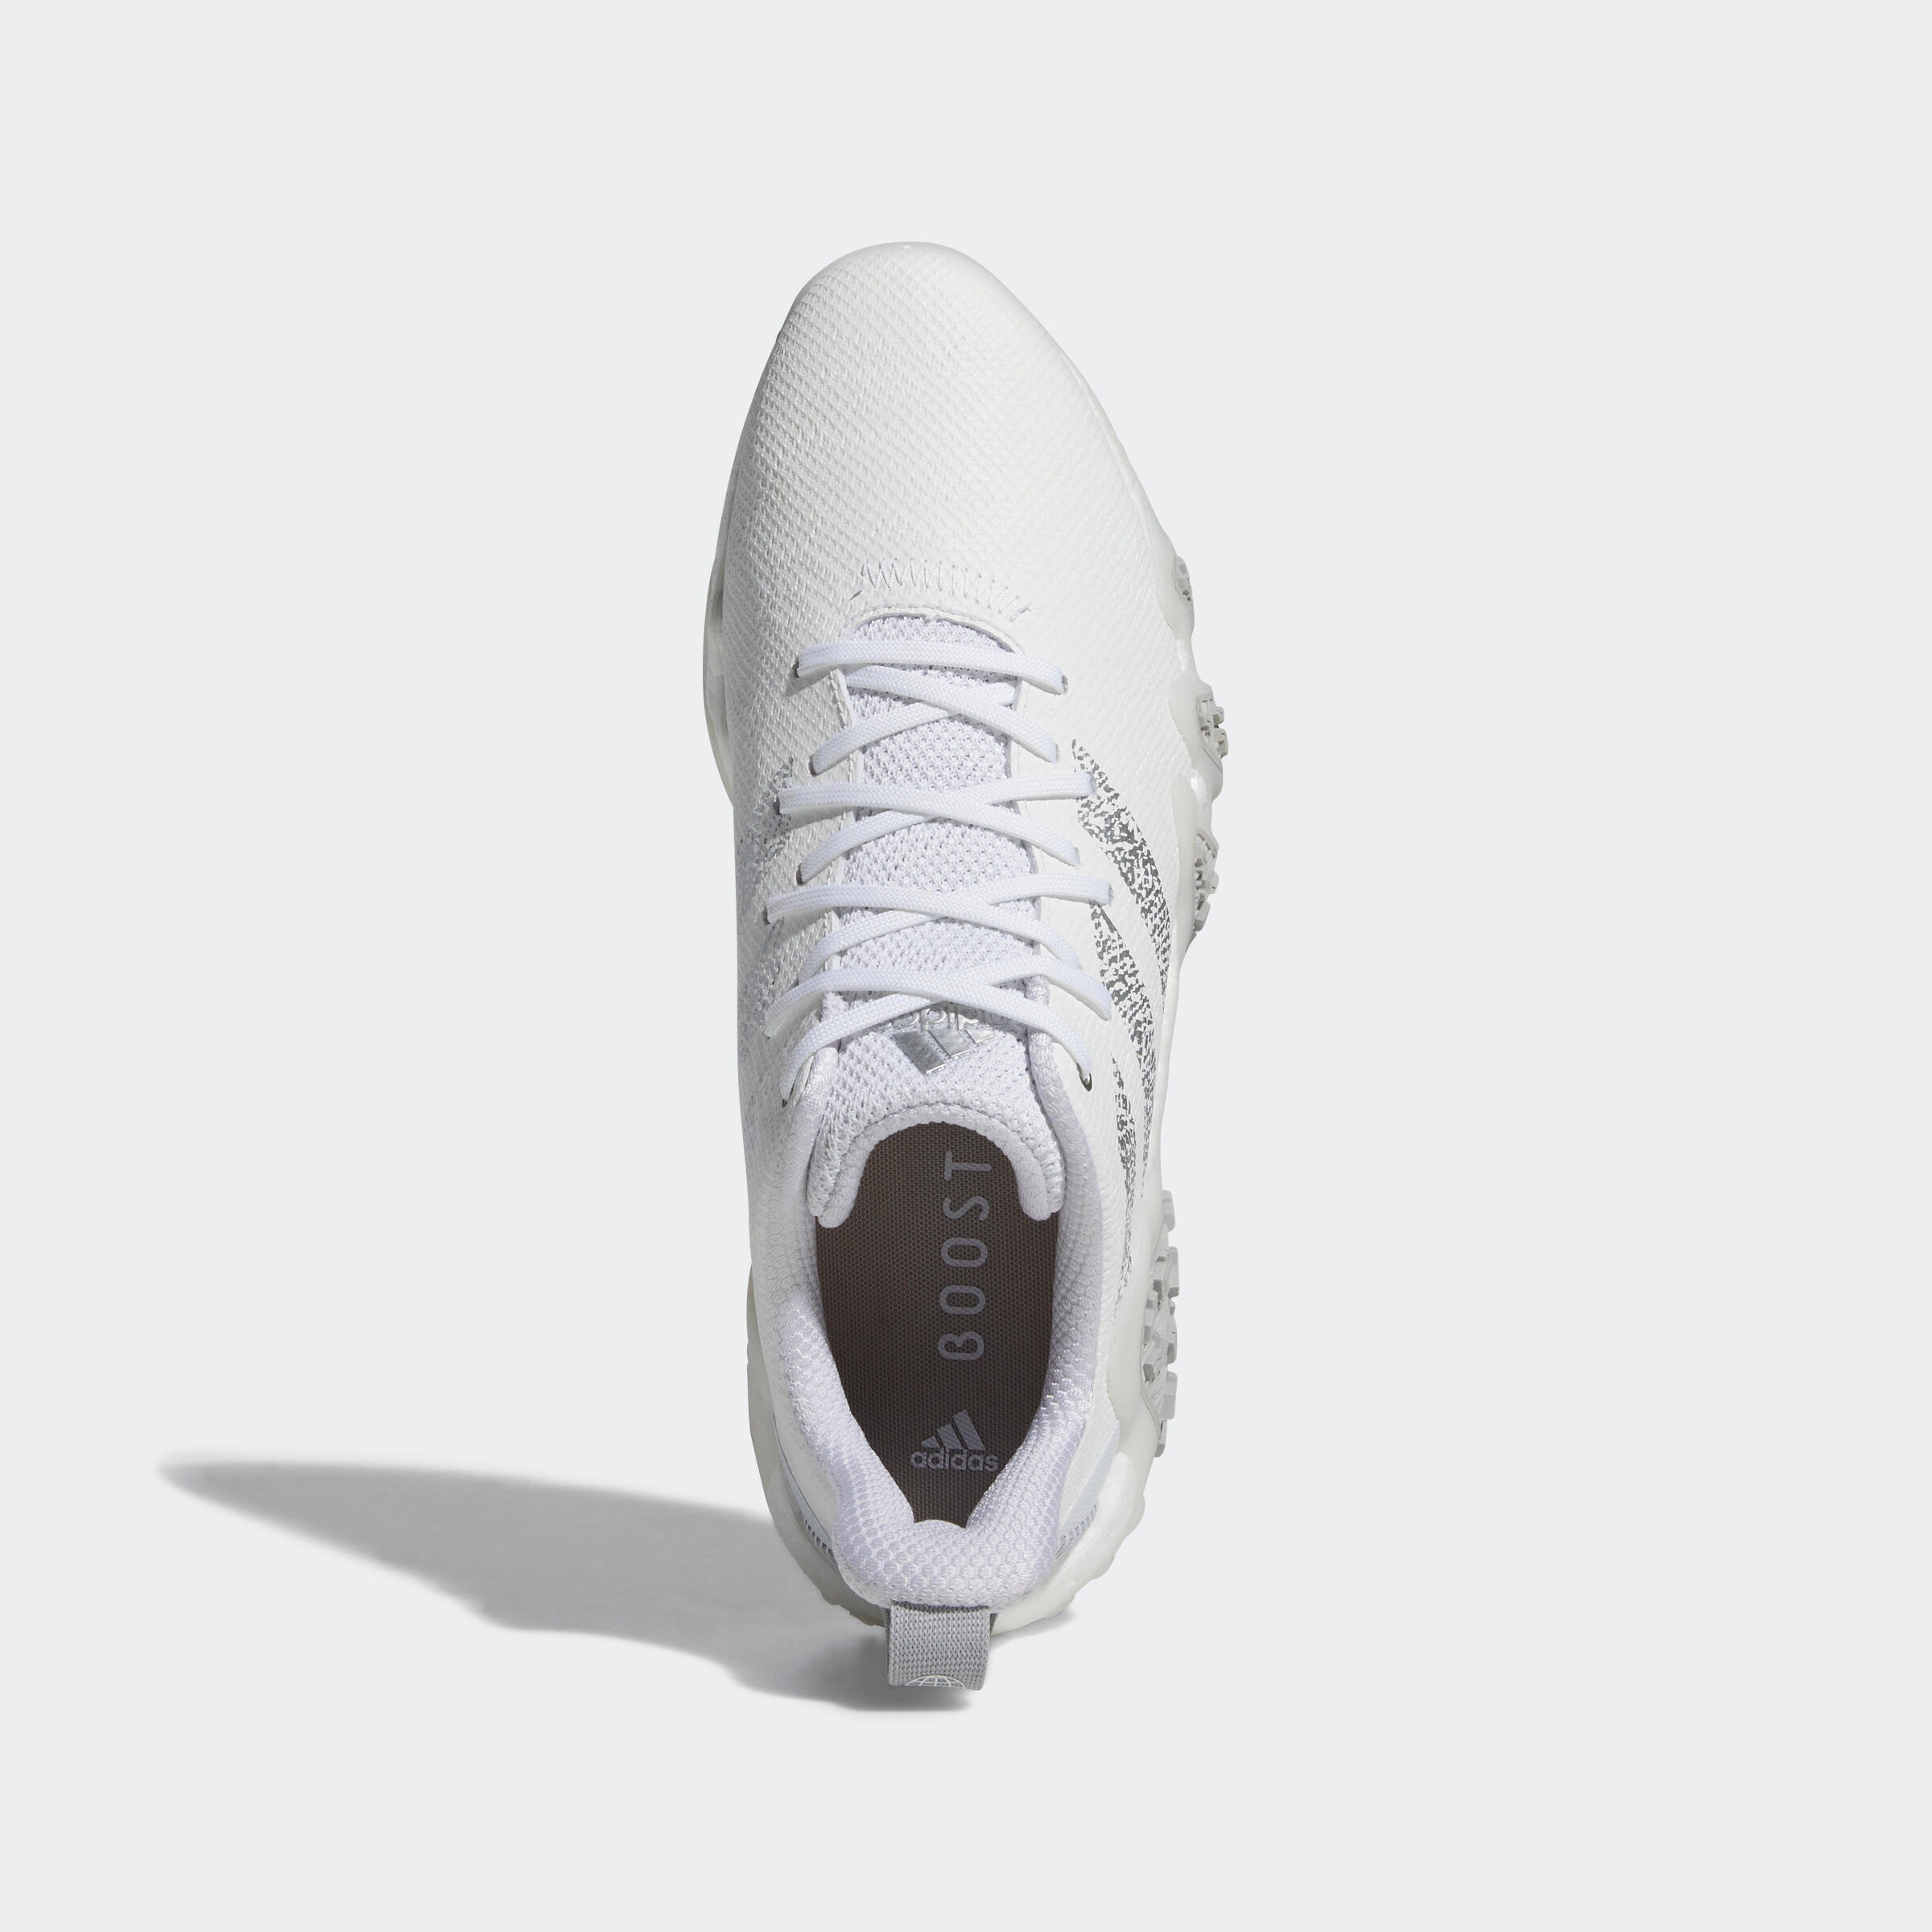 Men's golf shoes ADIDAS CODECHAOS spikeless - white 3/6